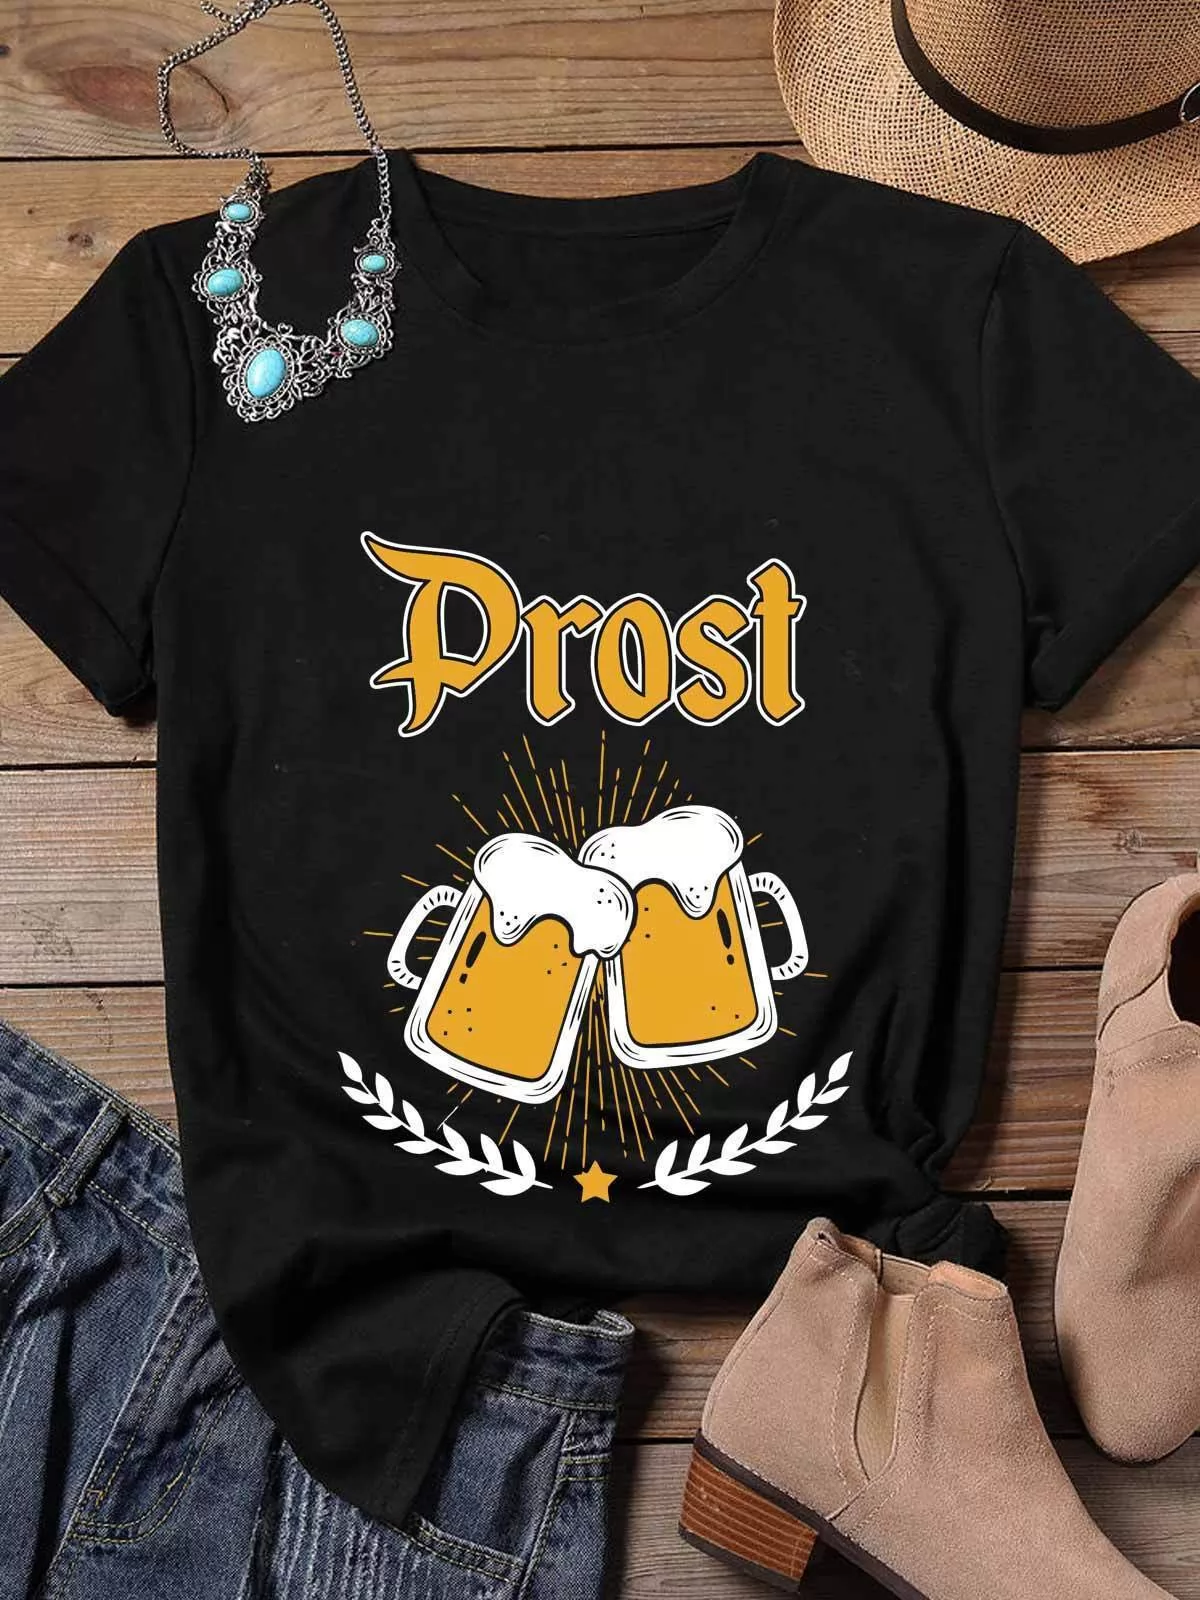 I Love Prost Beer T-Shirt